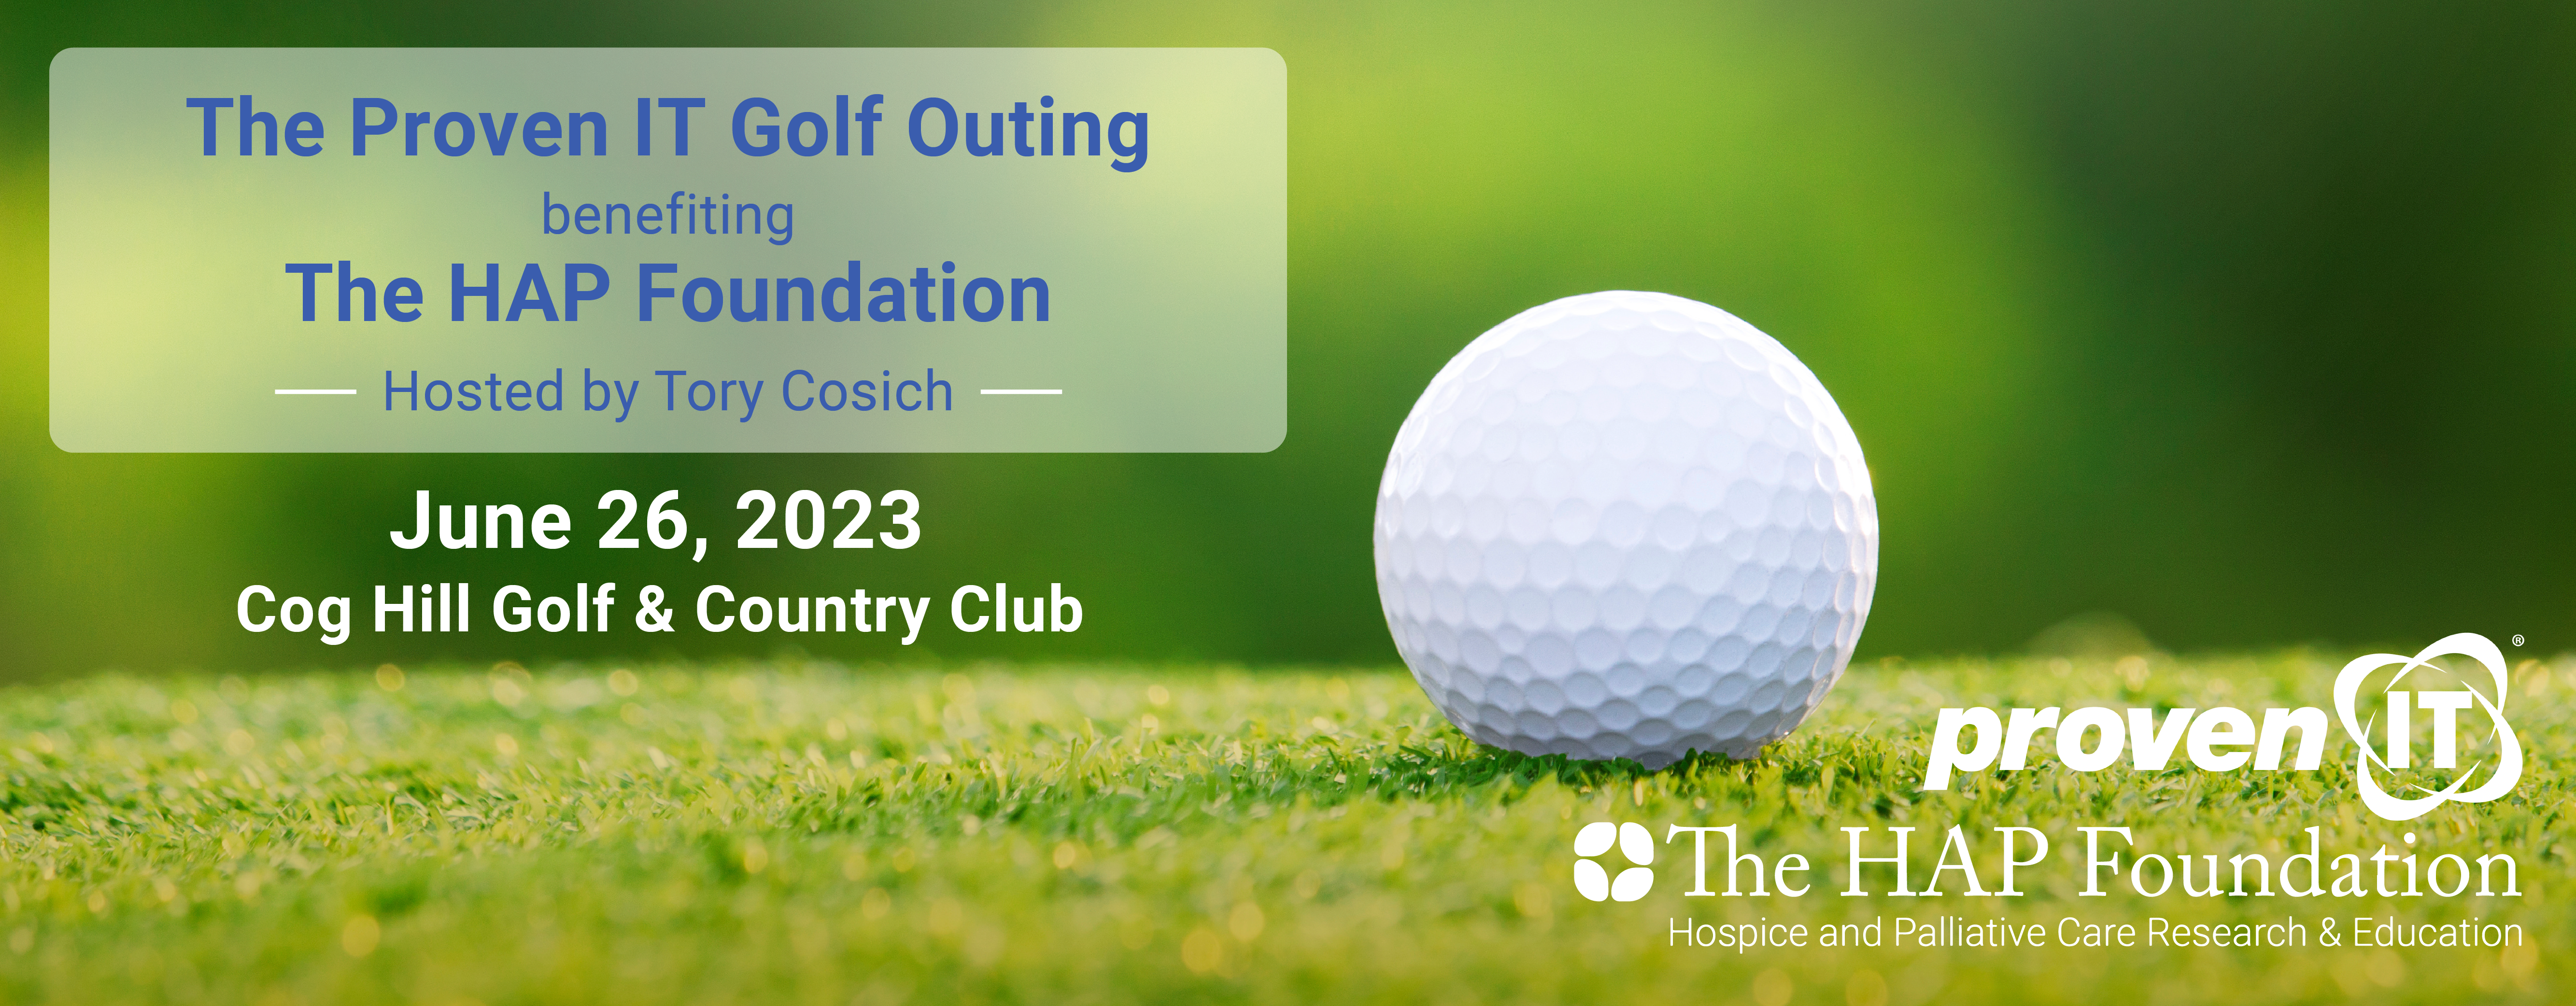 The HAP Foundation Hero Web Banner Golf 23